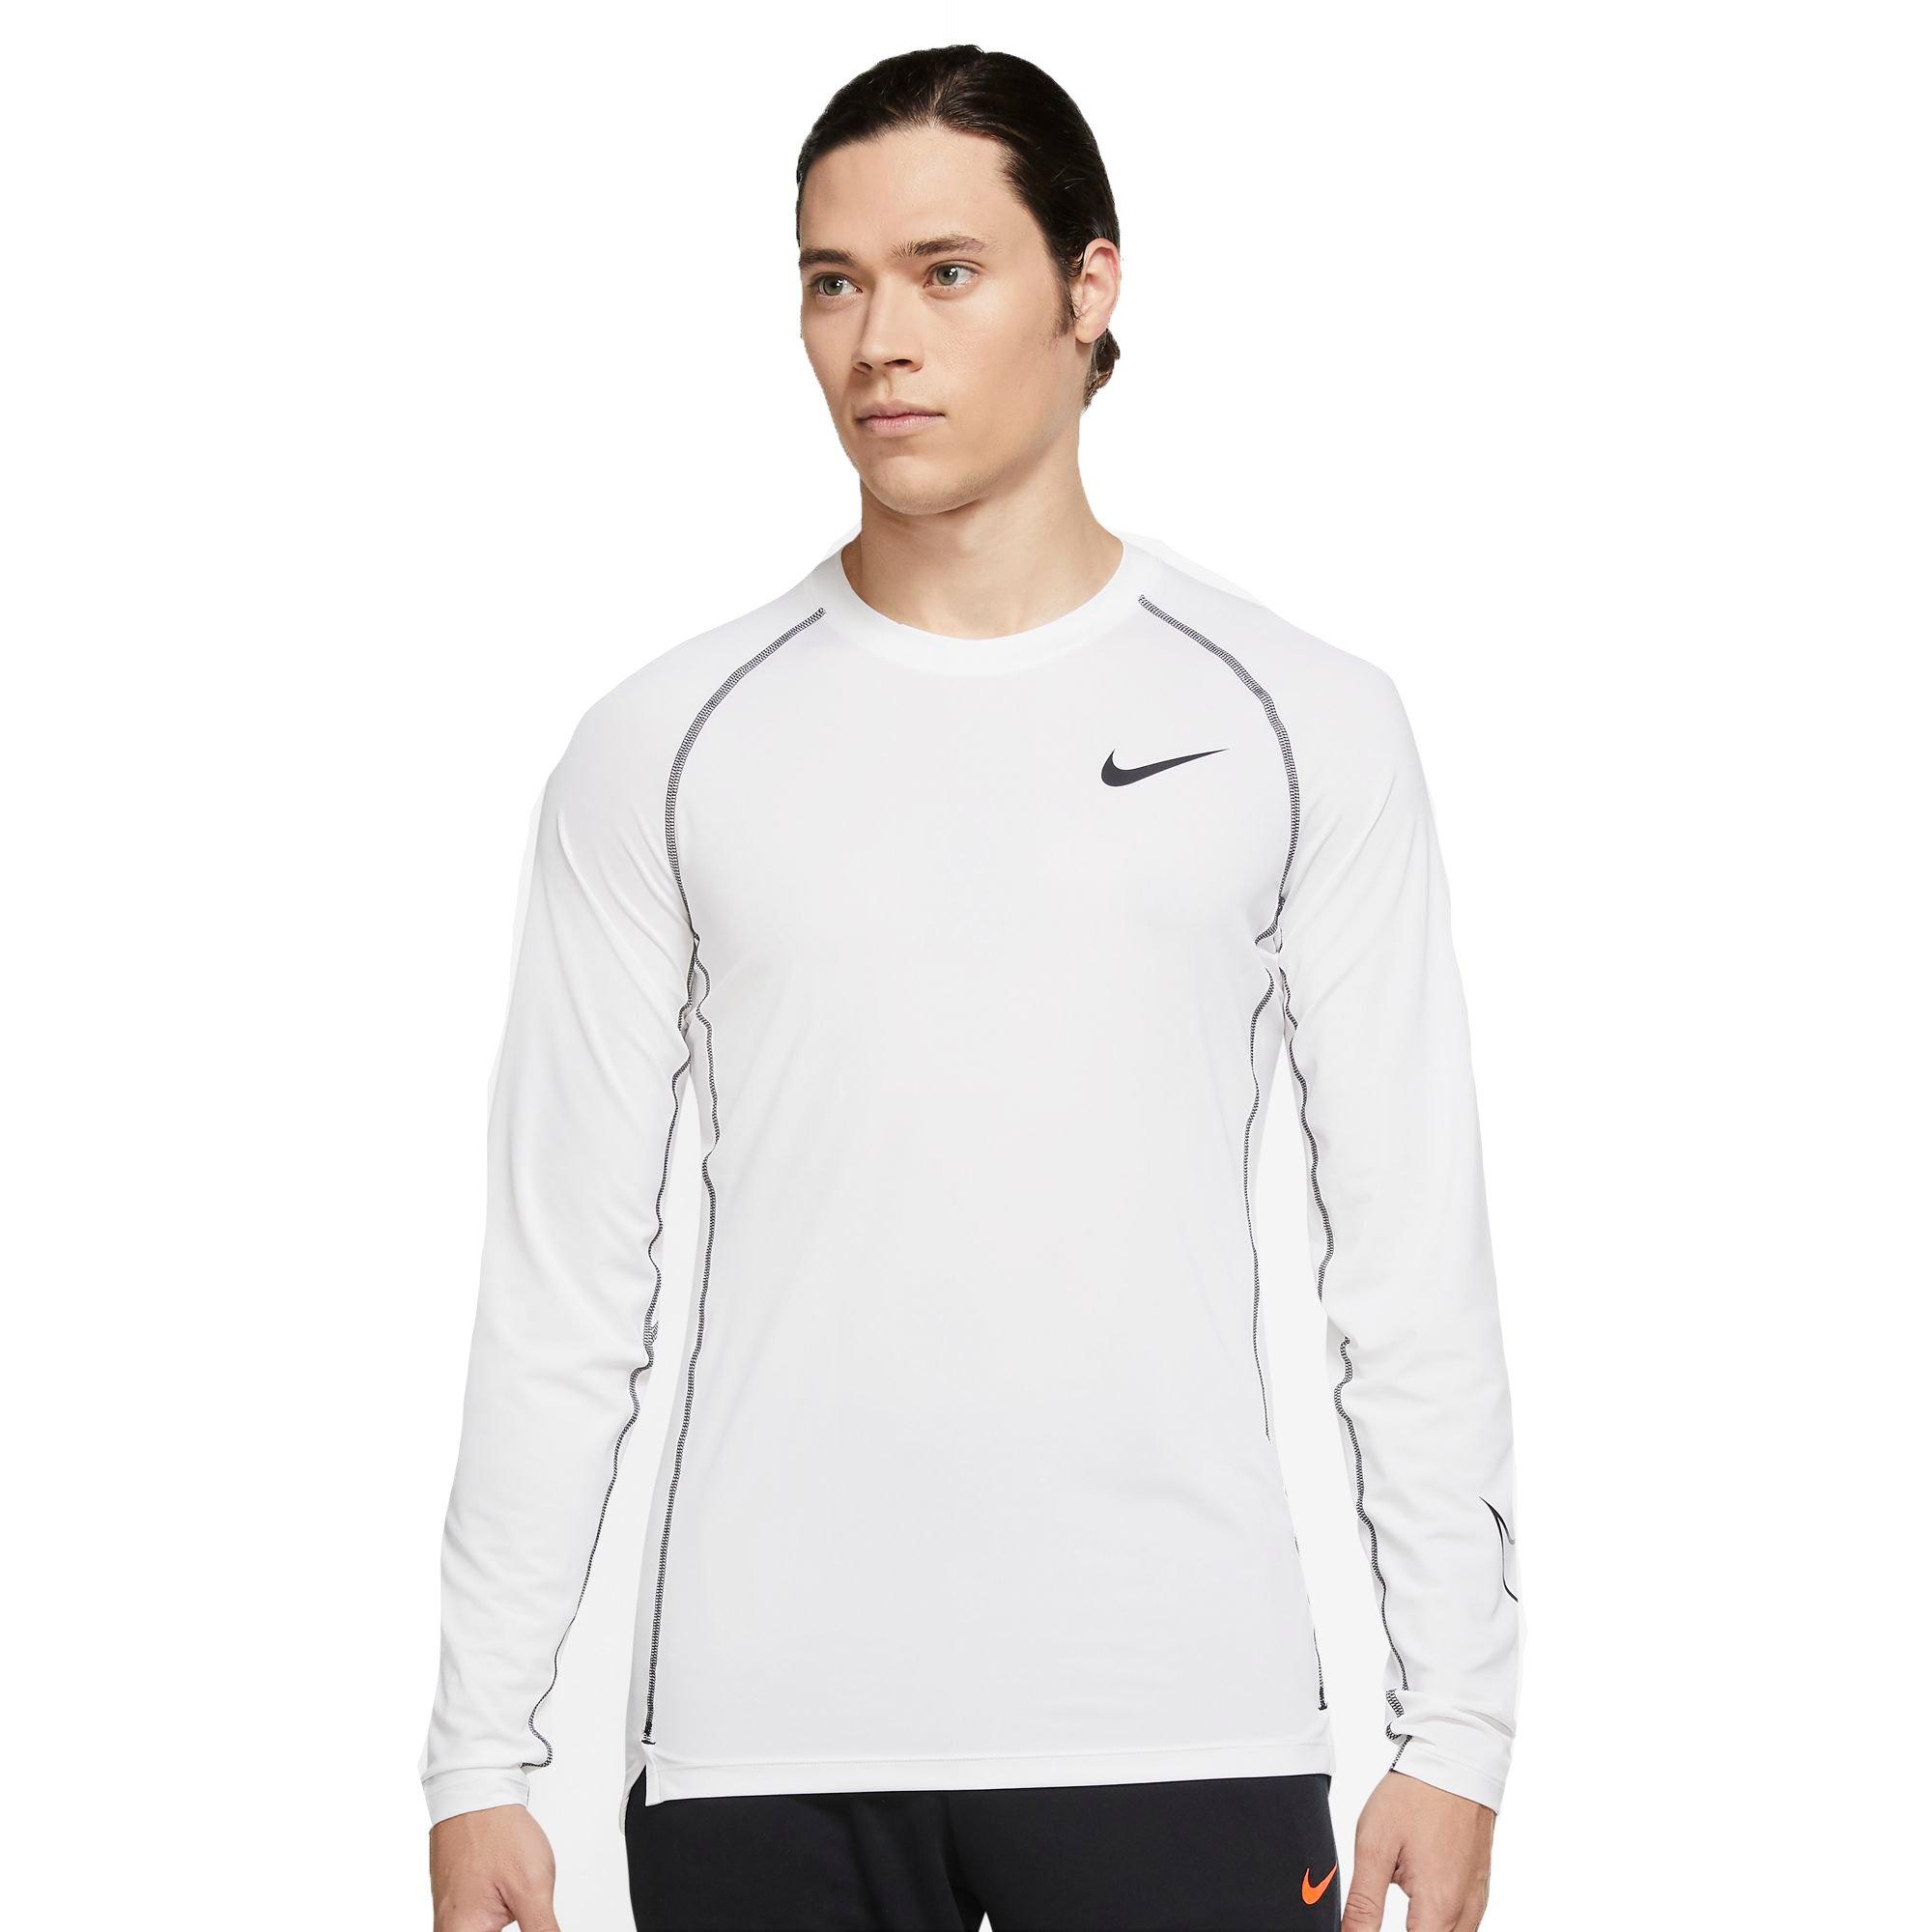 saber Adaptabilidad Poder Nike Men's Pro Dri-FIT Slim Fit Long-Sleeve "White" Top